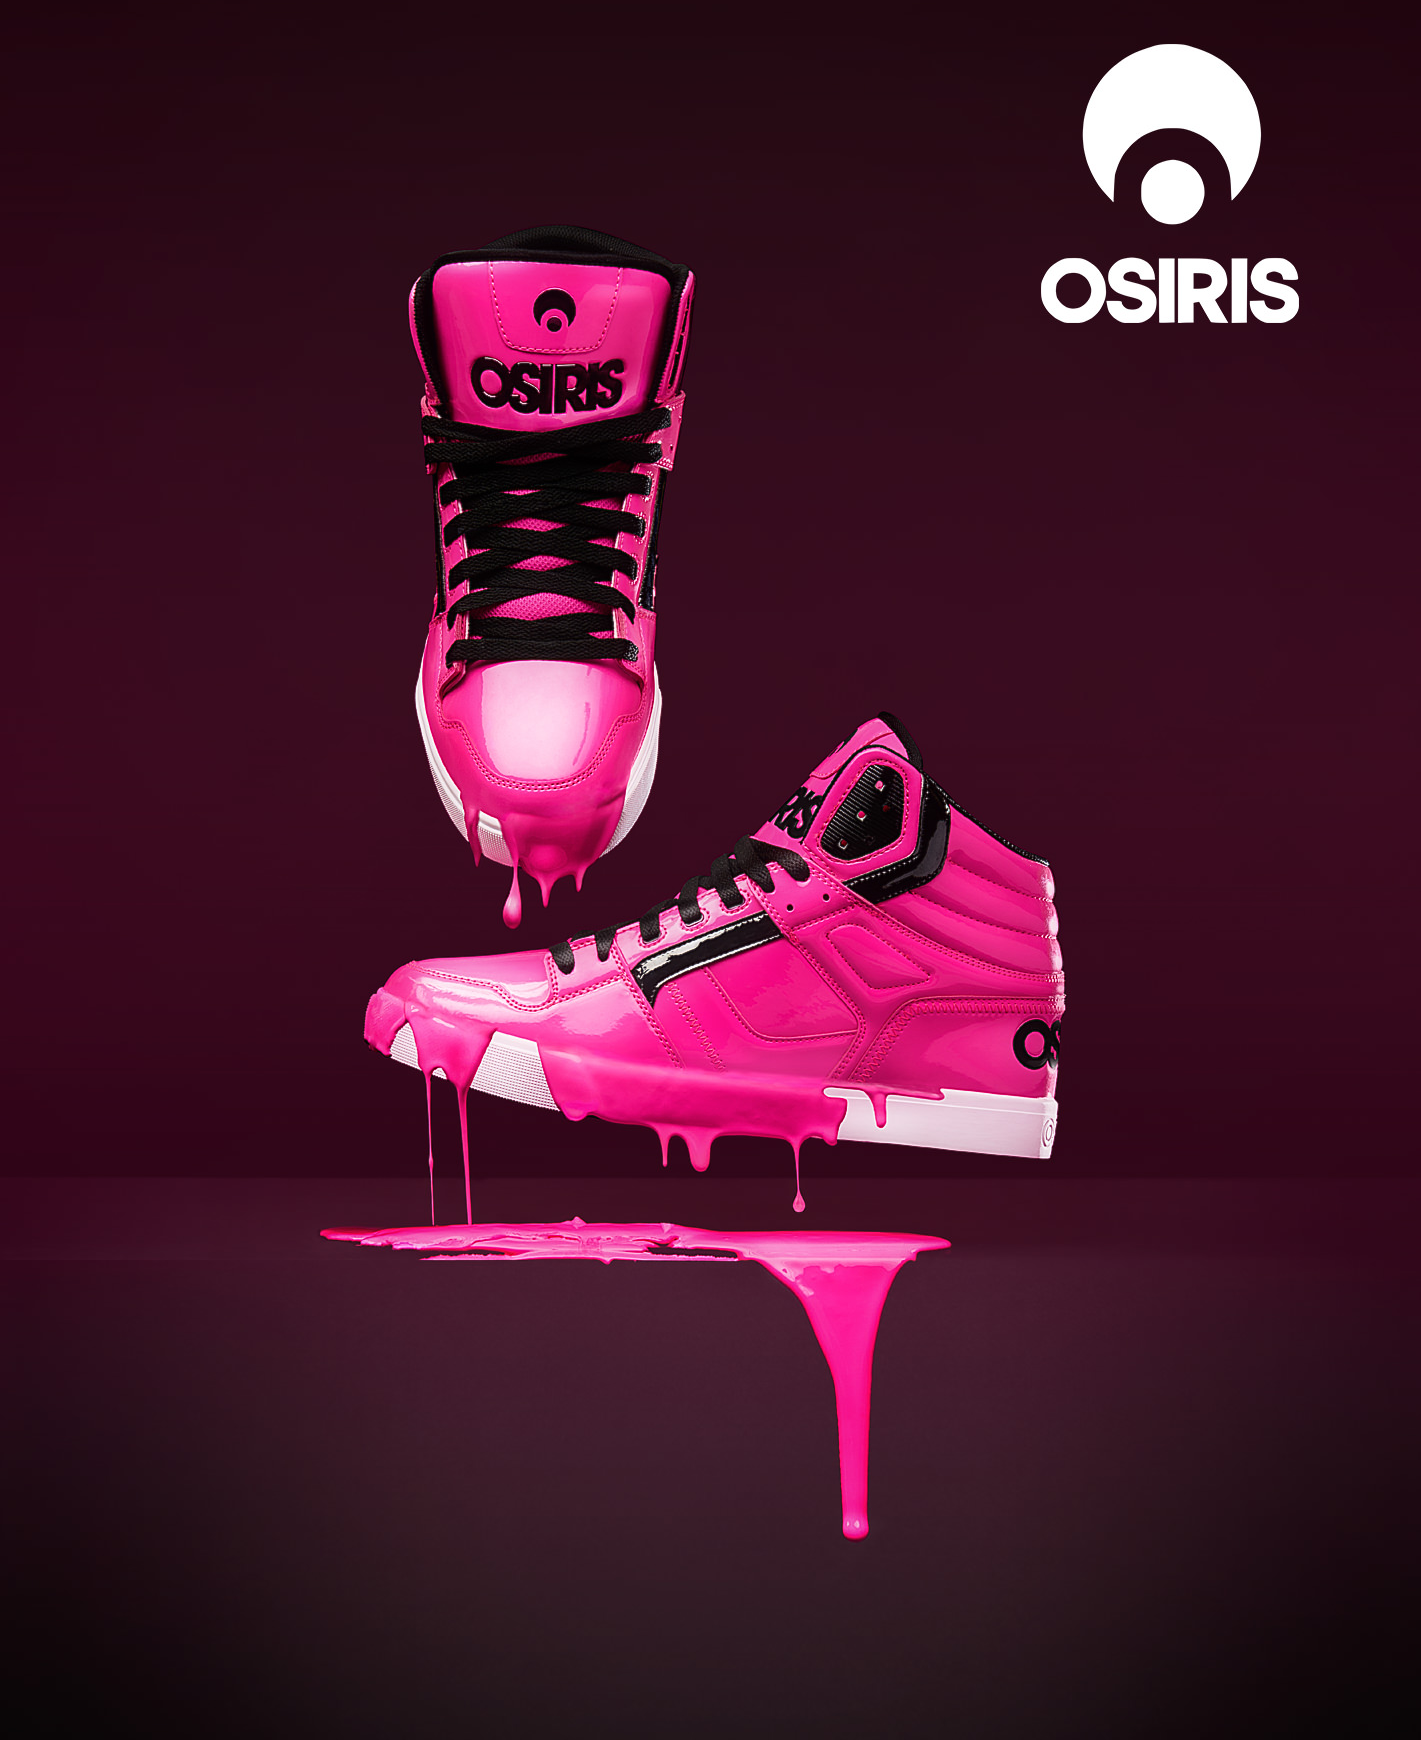 RossJames_Osiris-Shoes_PINK1.png